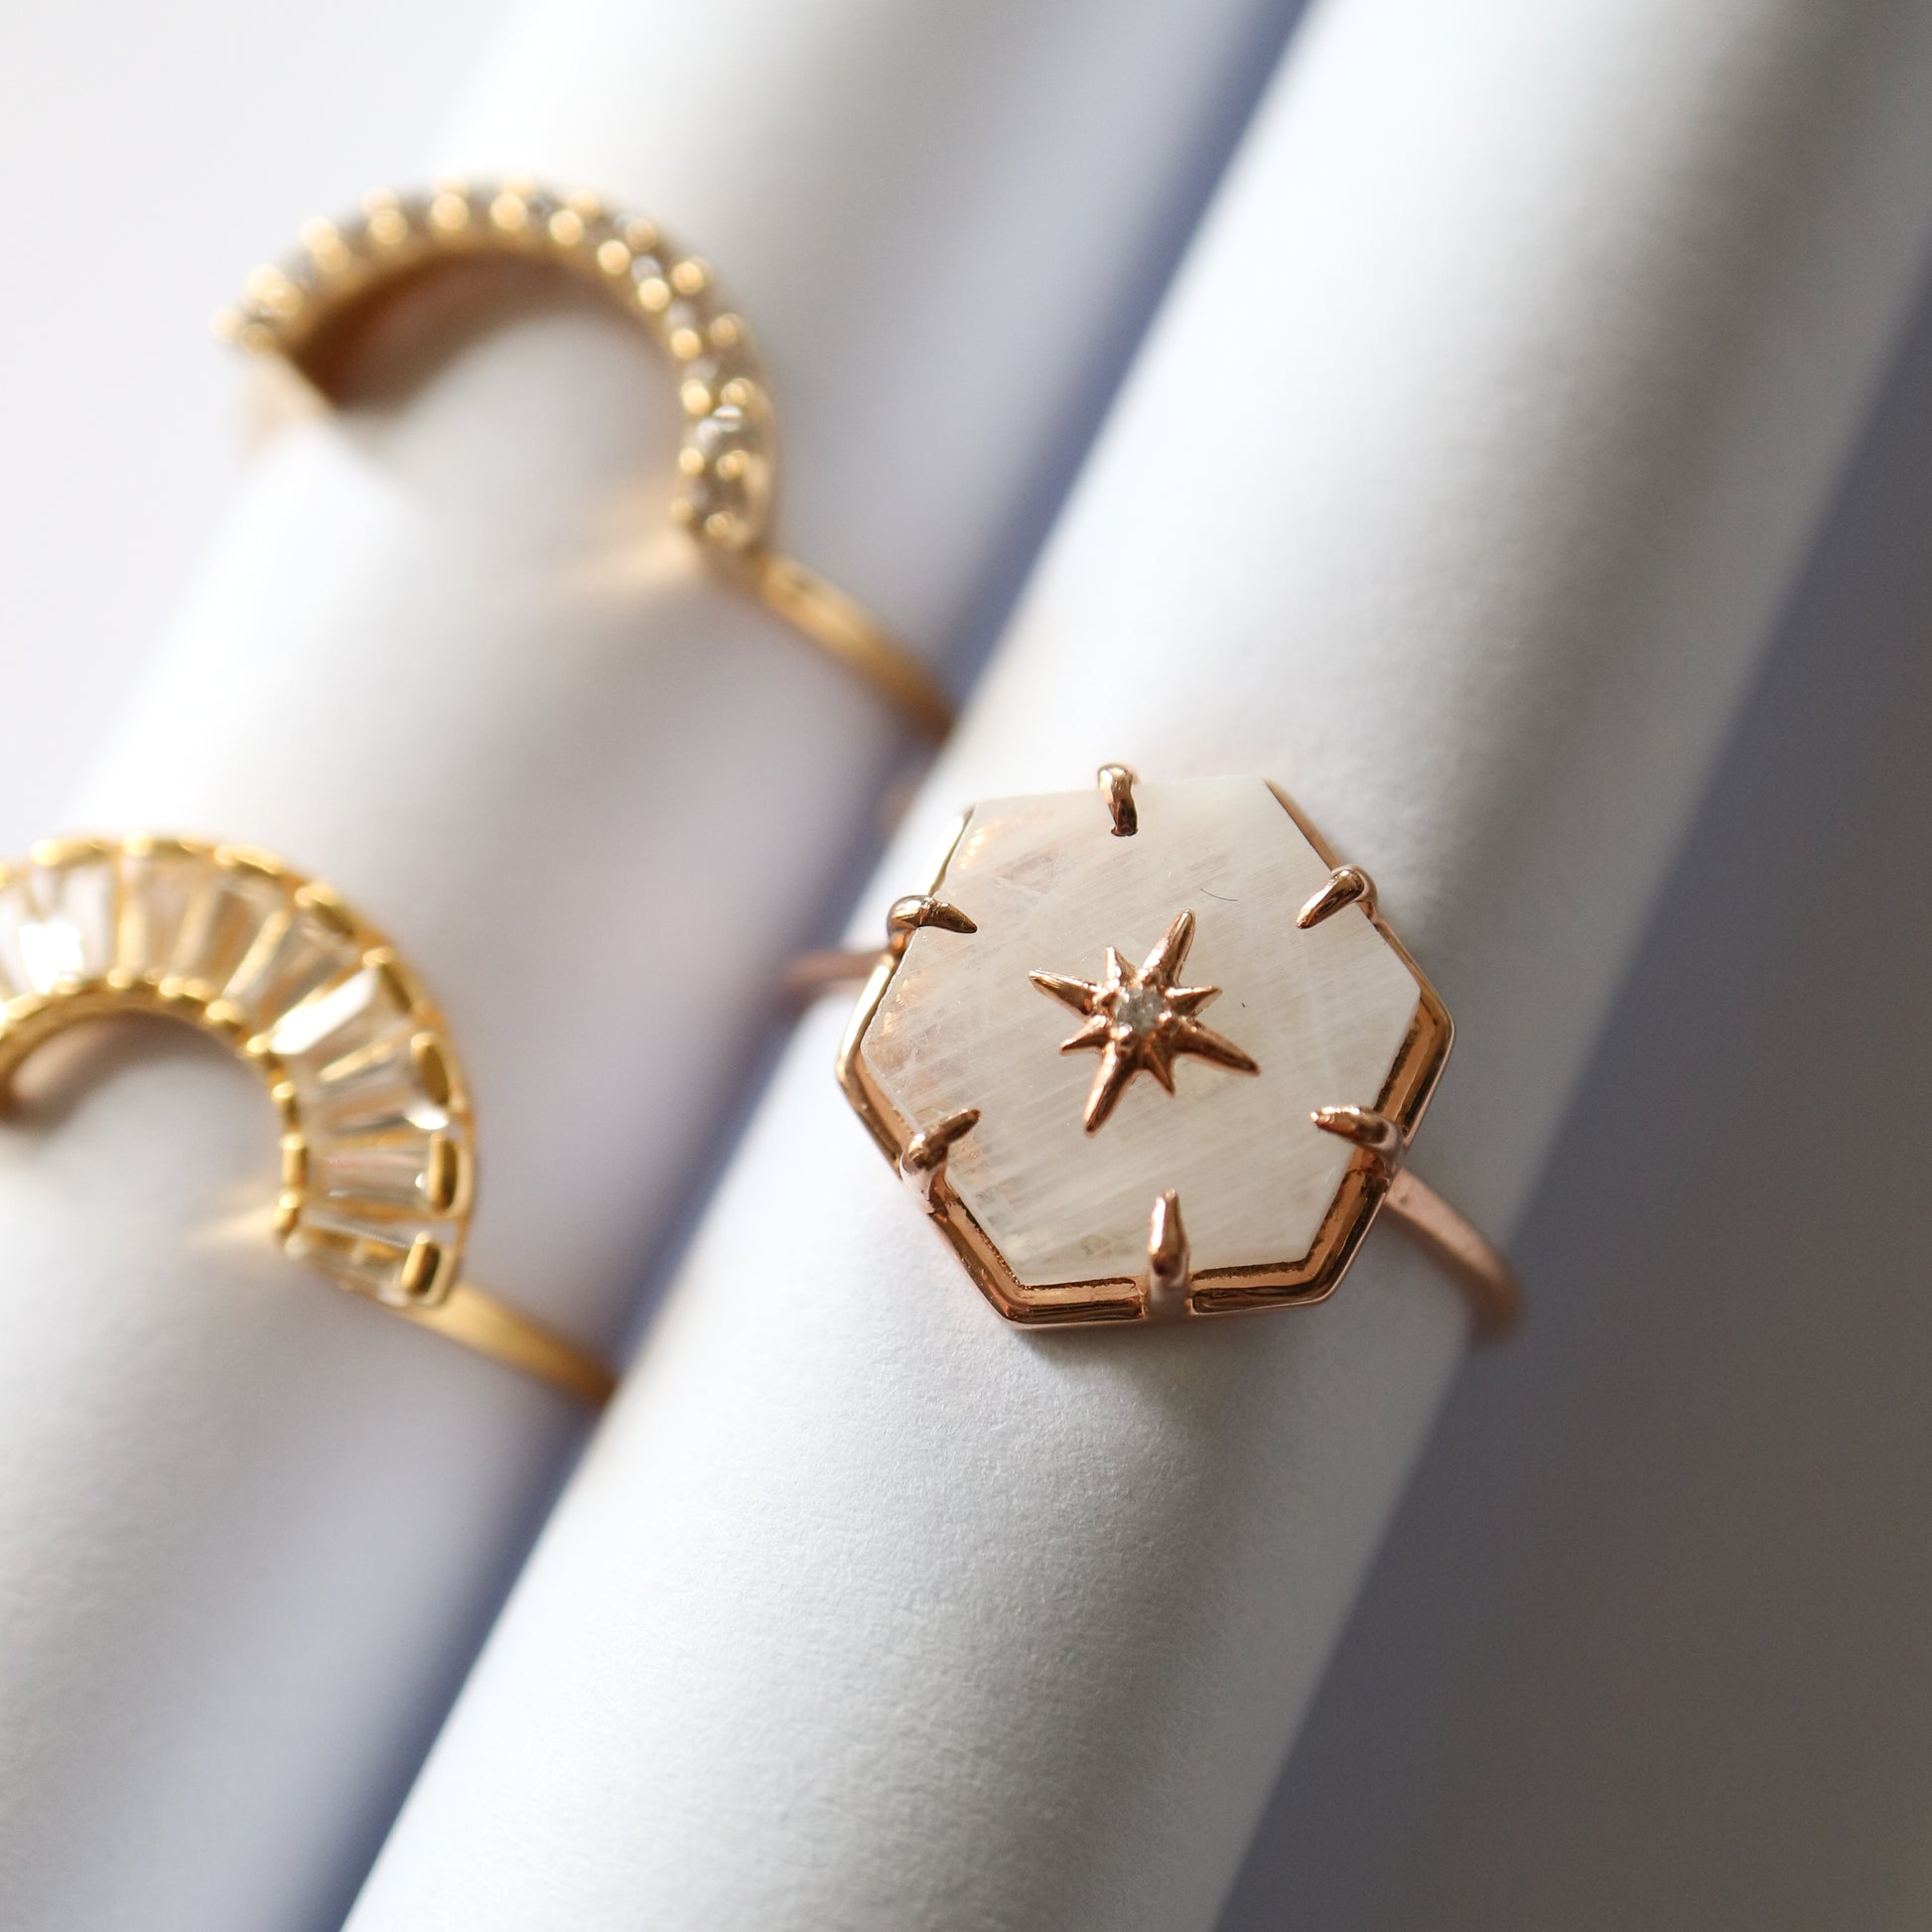 Rose gold star studded rainbow moonstone ring by La Kaiser Jewellery